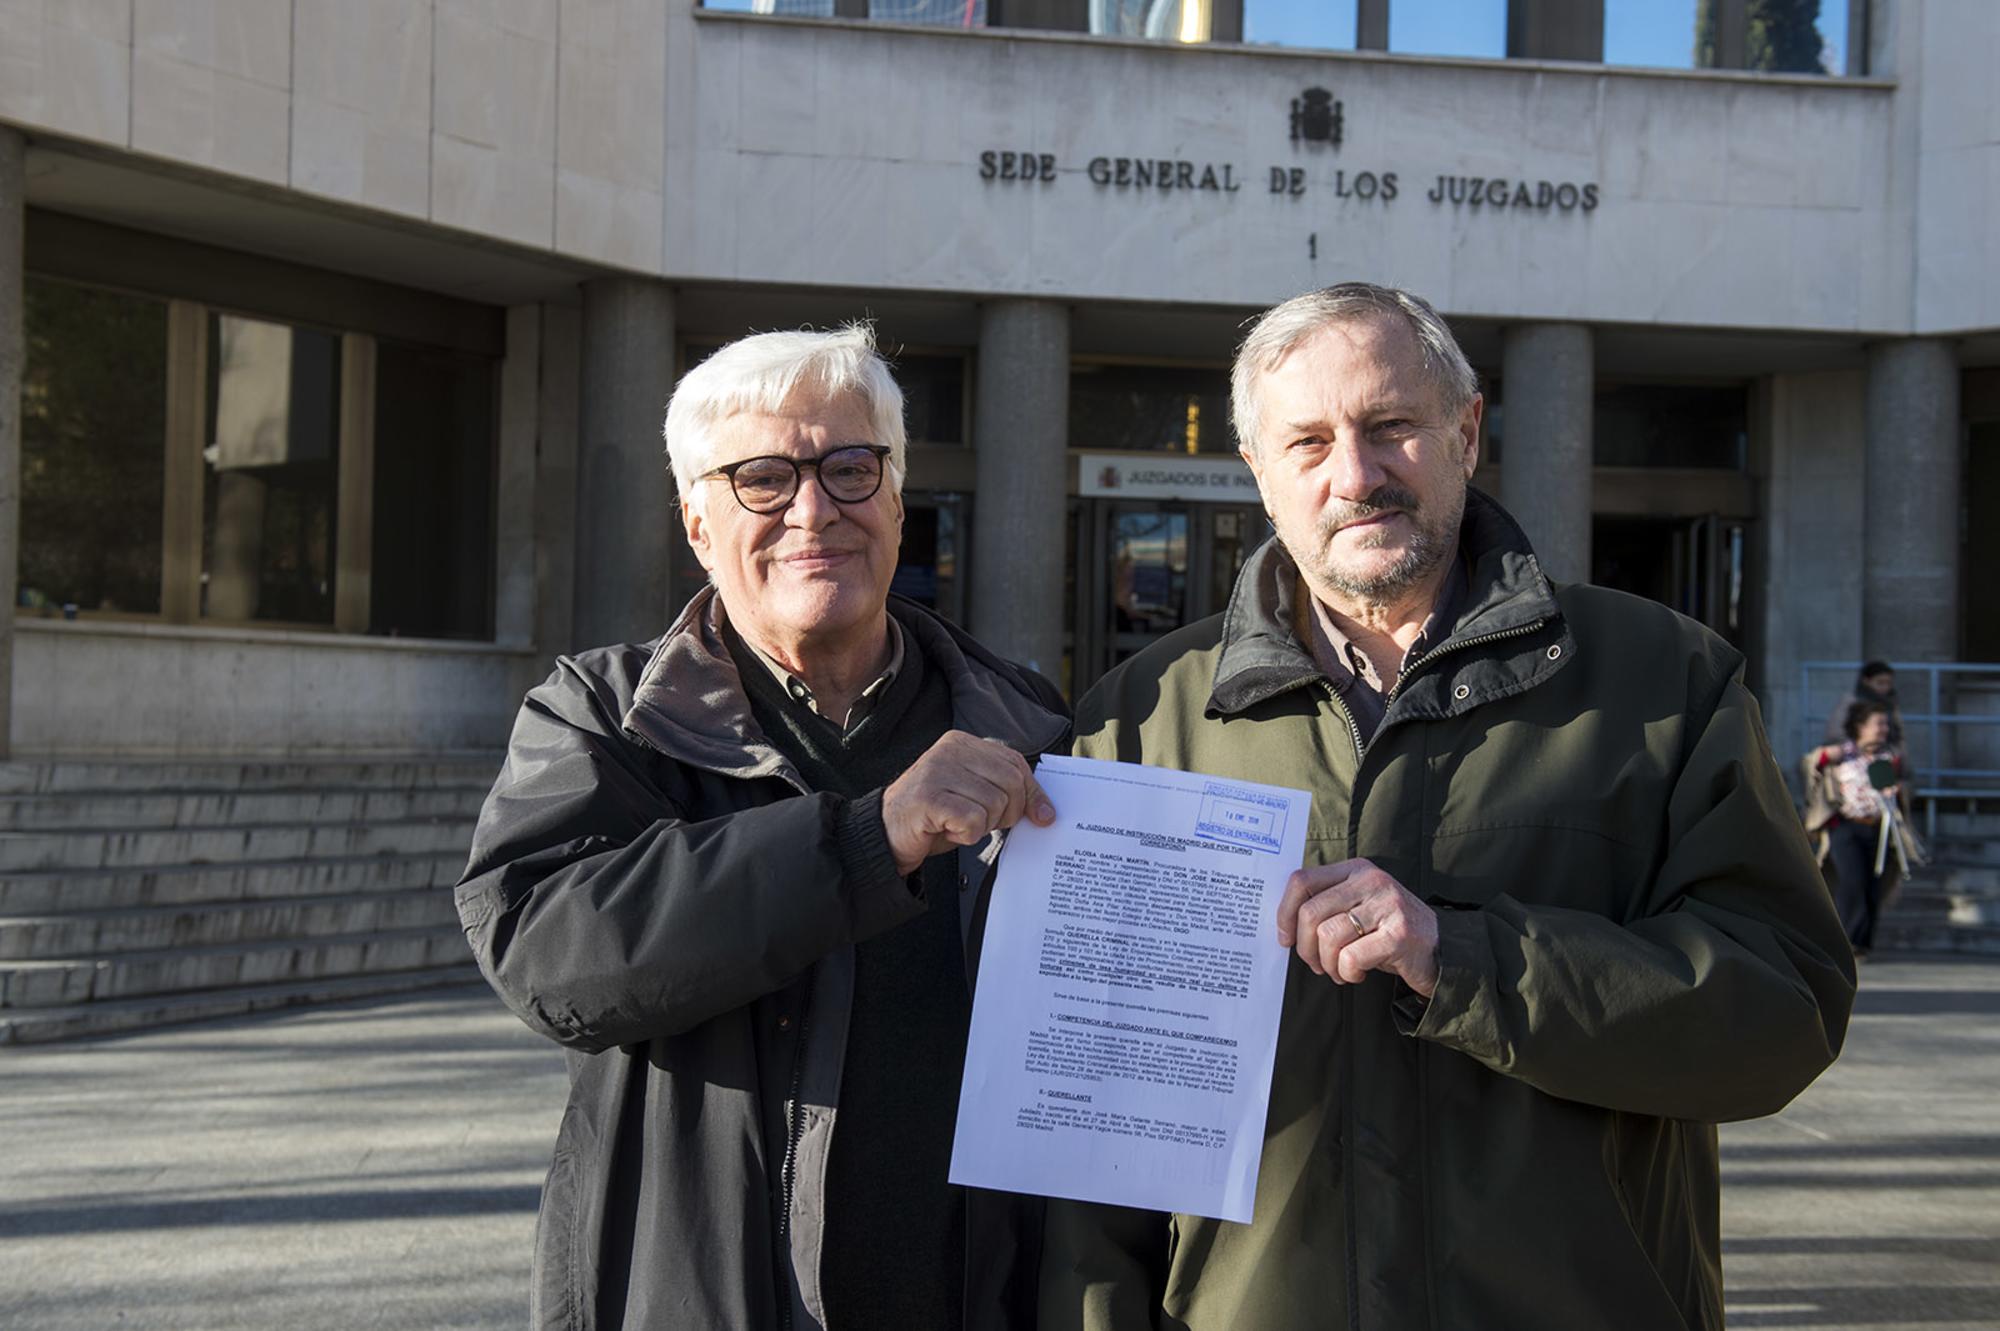 Chato Galante y Willy Meyer denuncian torturas